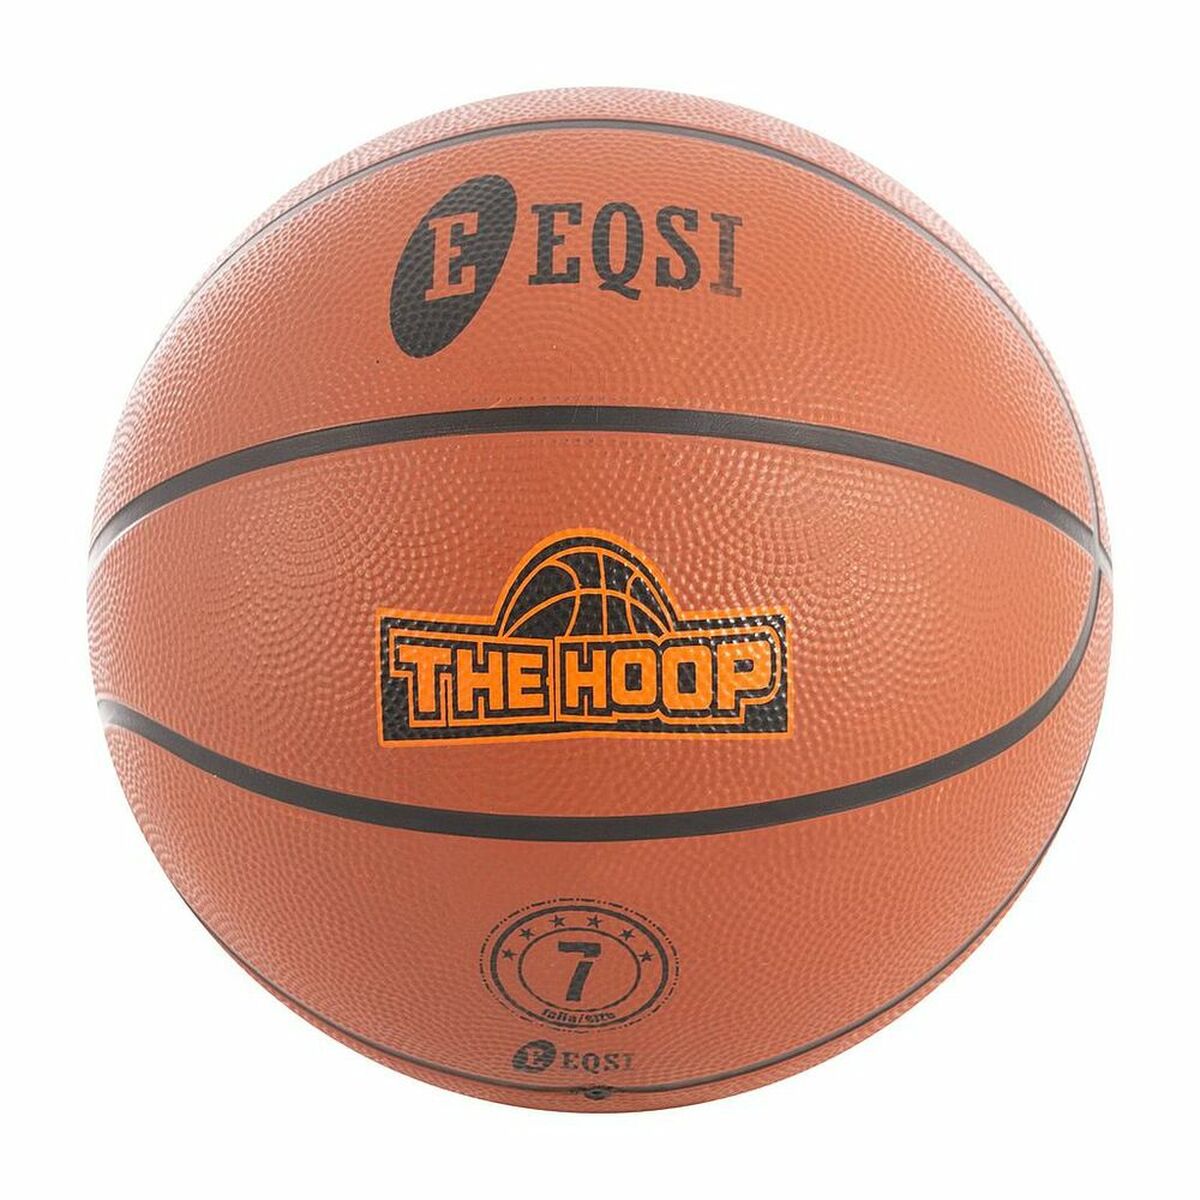 Basketball Ball Eqsi 40002 Brown Natural rubber 7